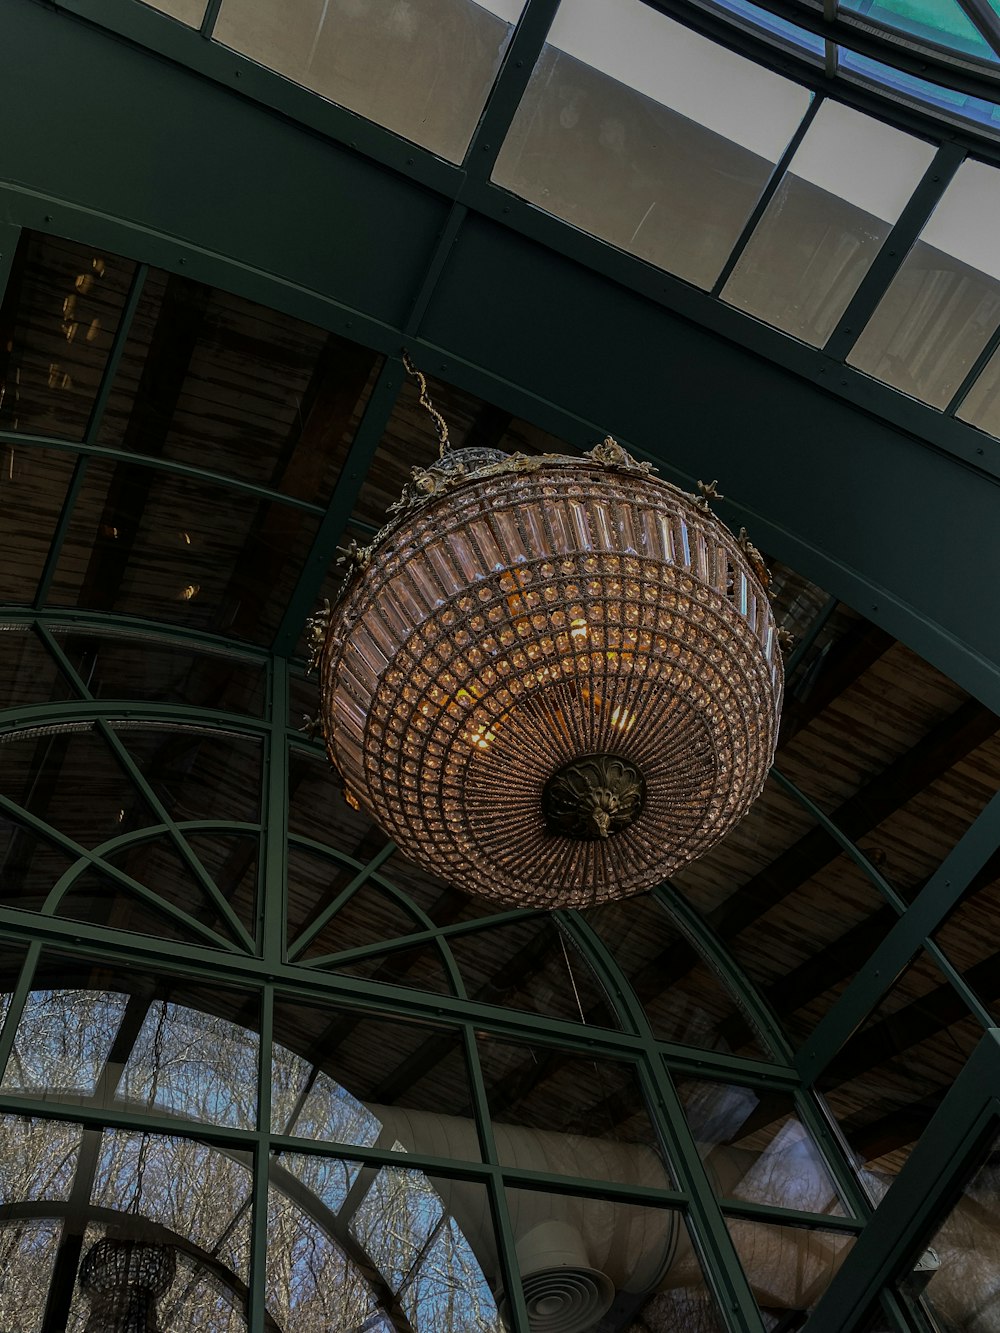 a large ornate ceiling fan